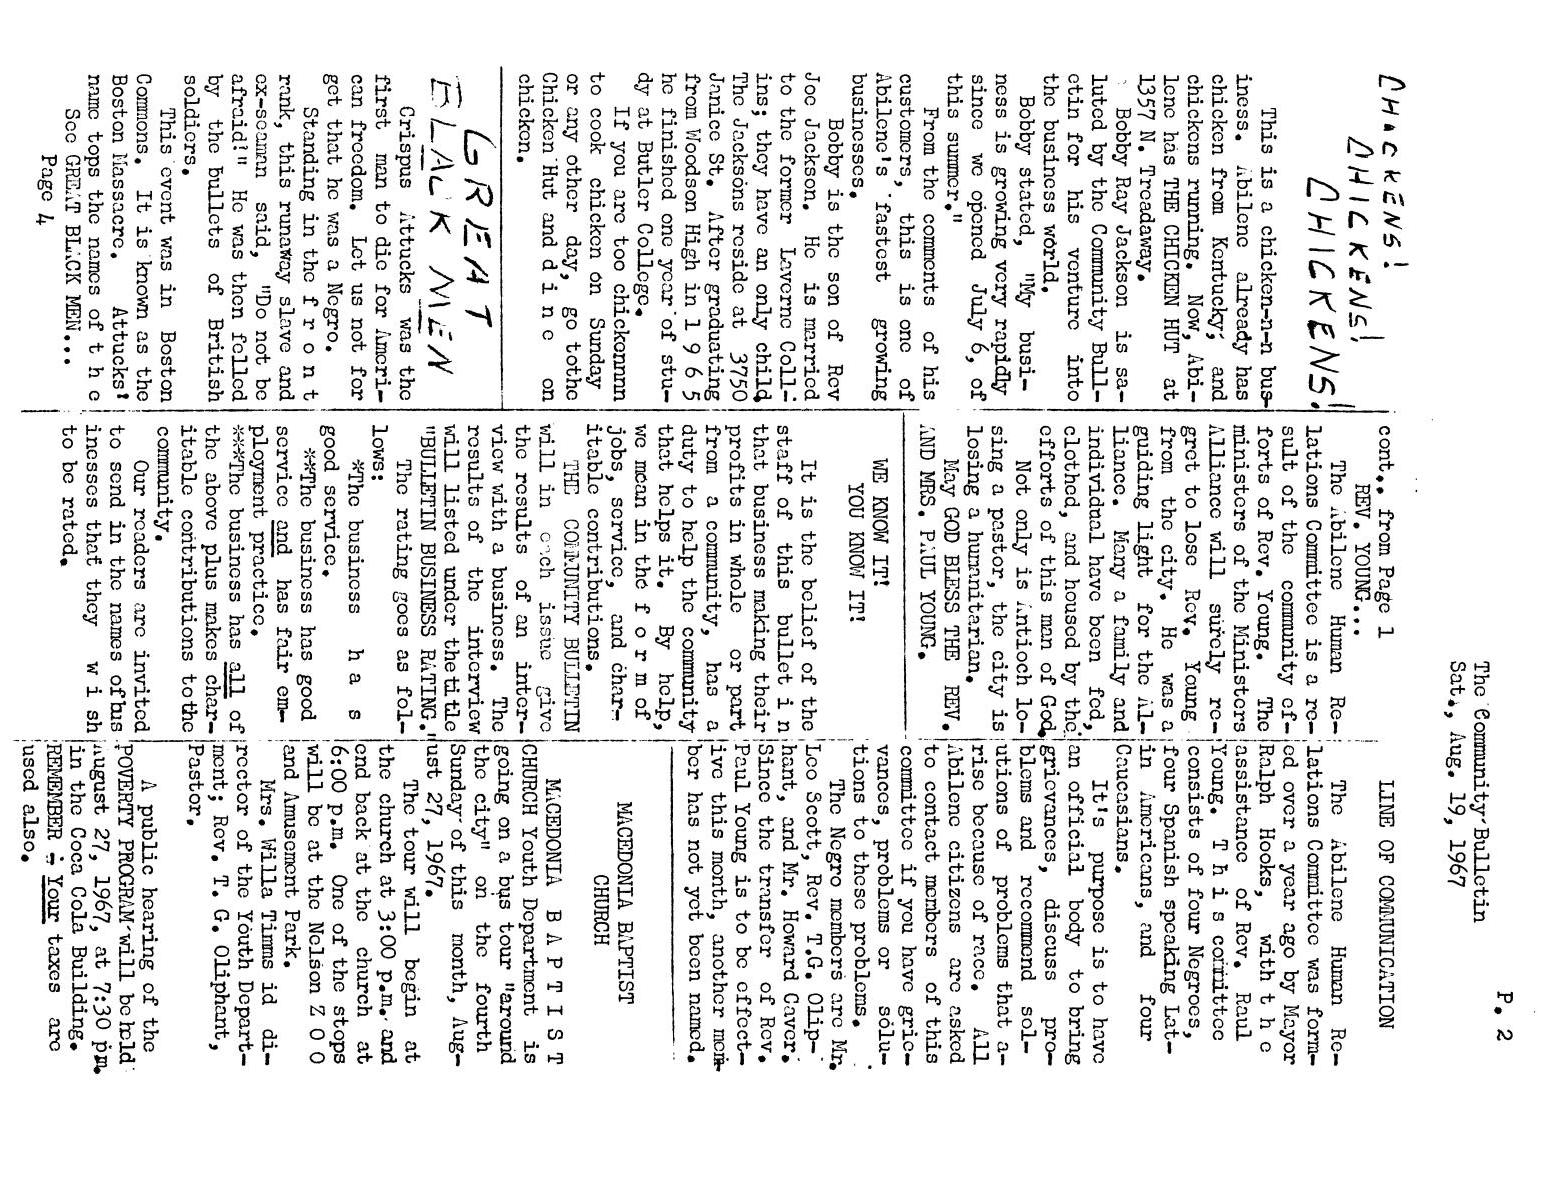 The Community Bulletin (Abilene, Texas), No. 1, Saturday, August 19, 1967
                                                
                                                    2
                                                